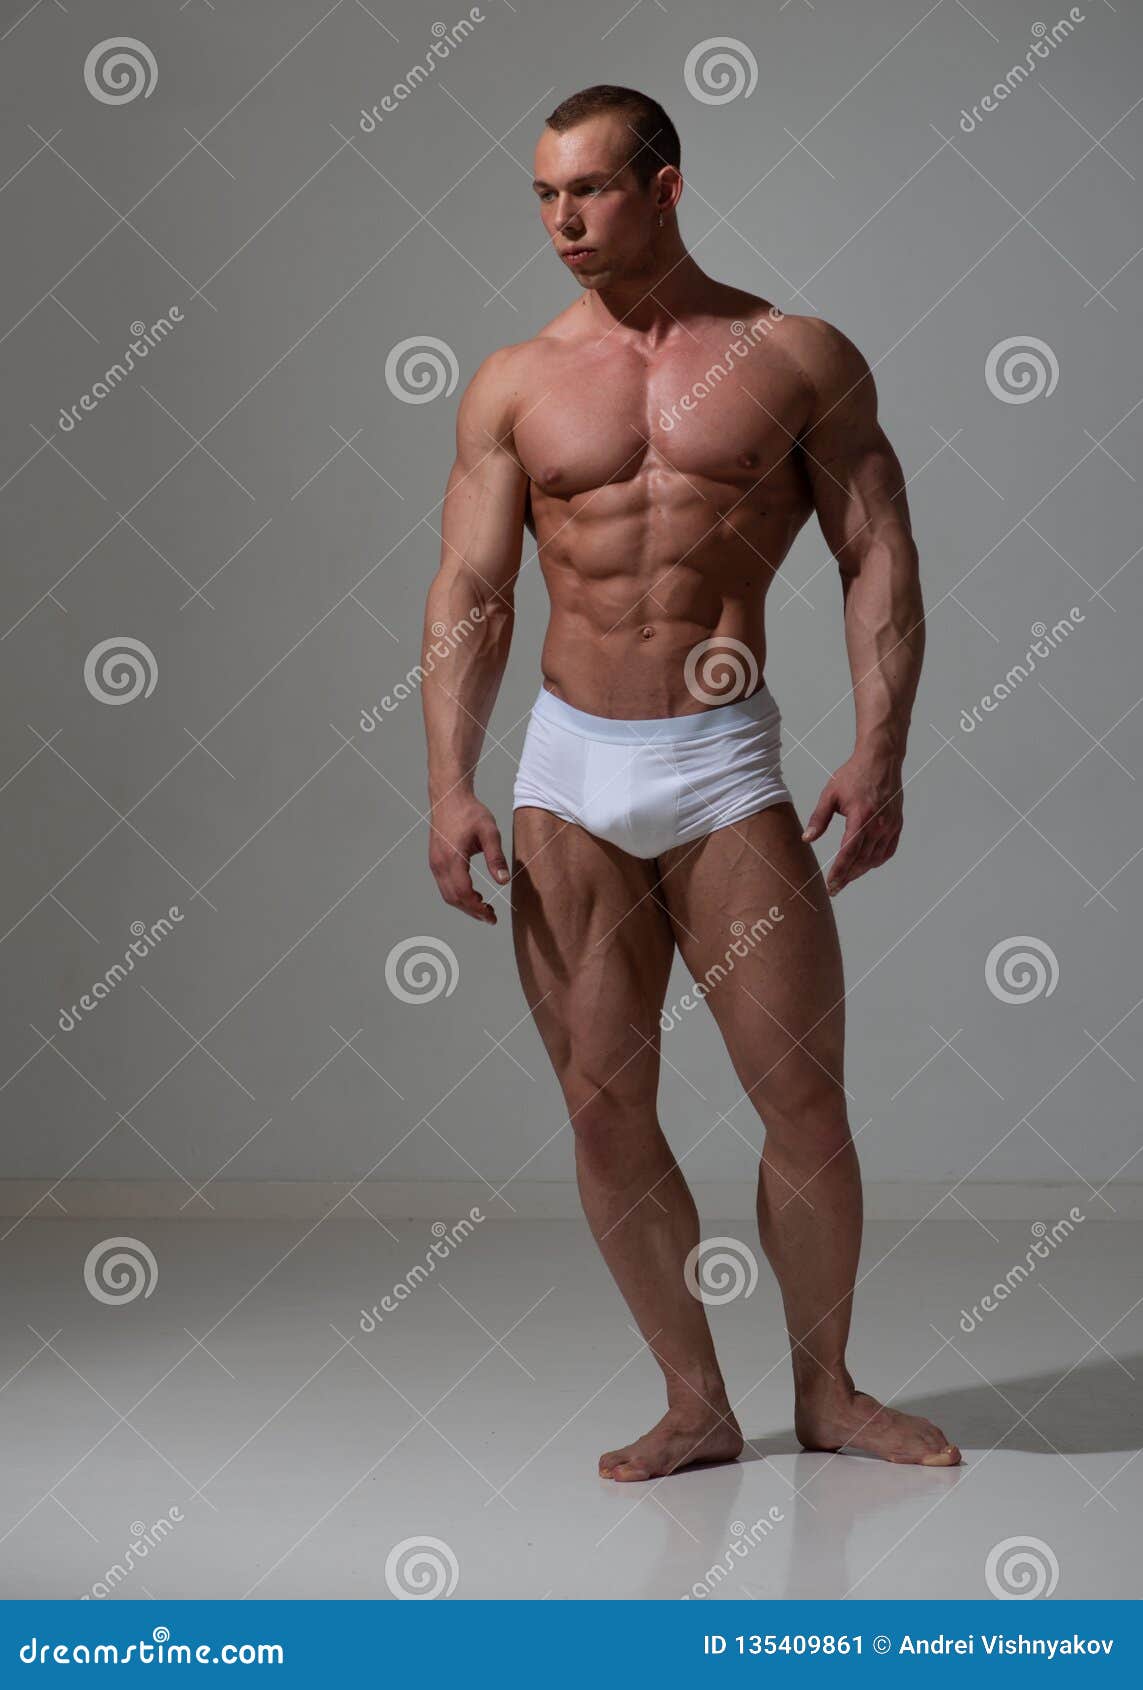 Man Fitness Photo Model